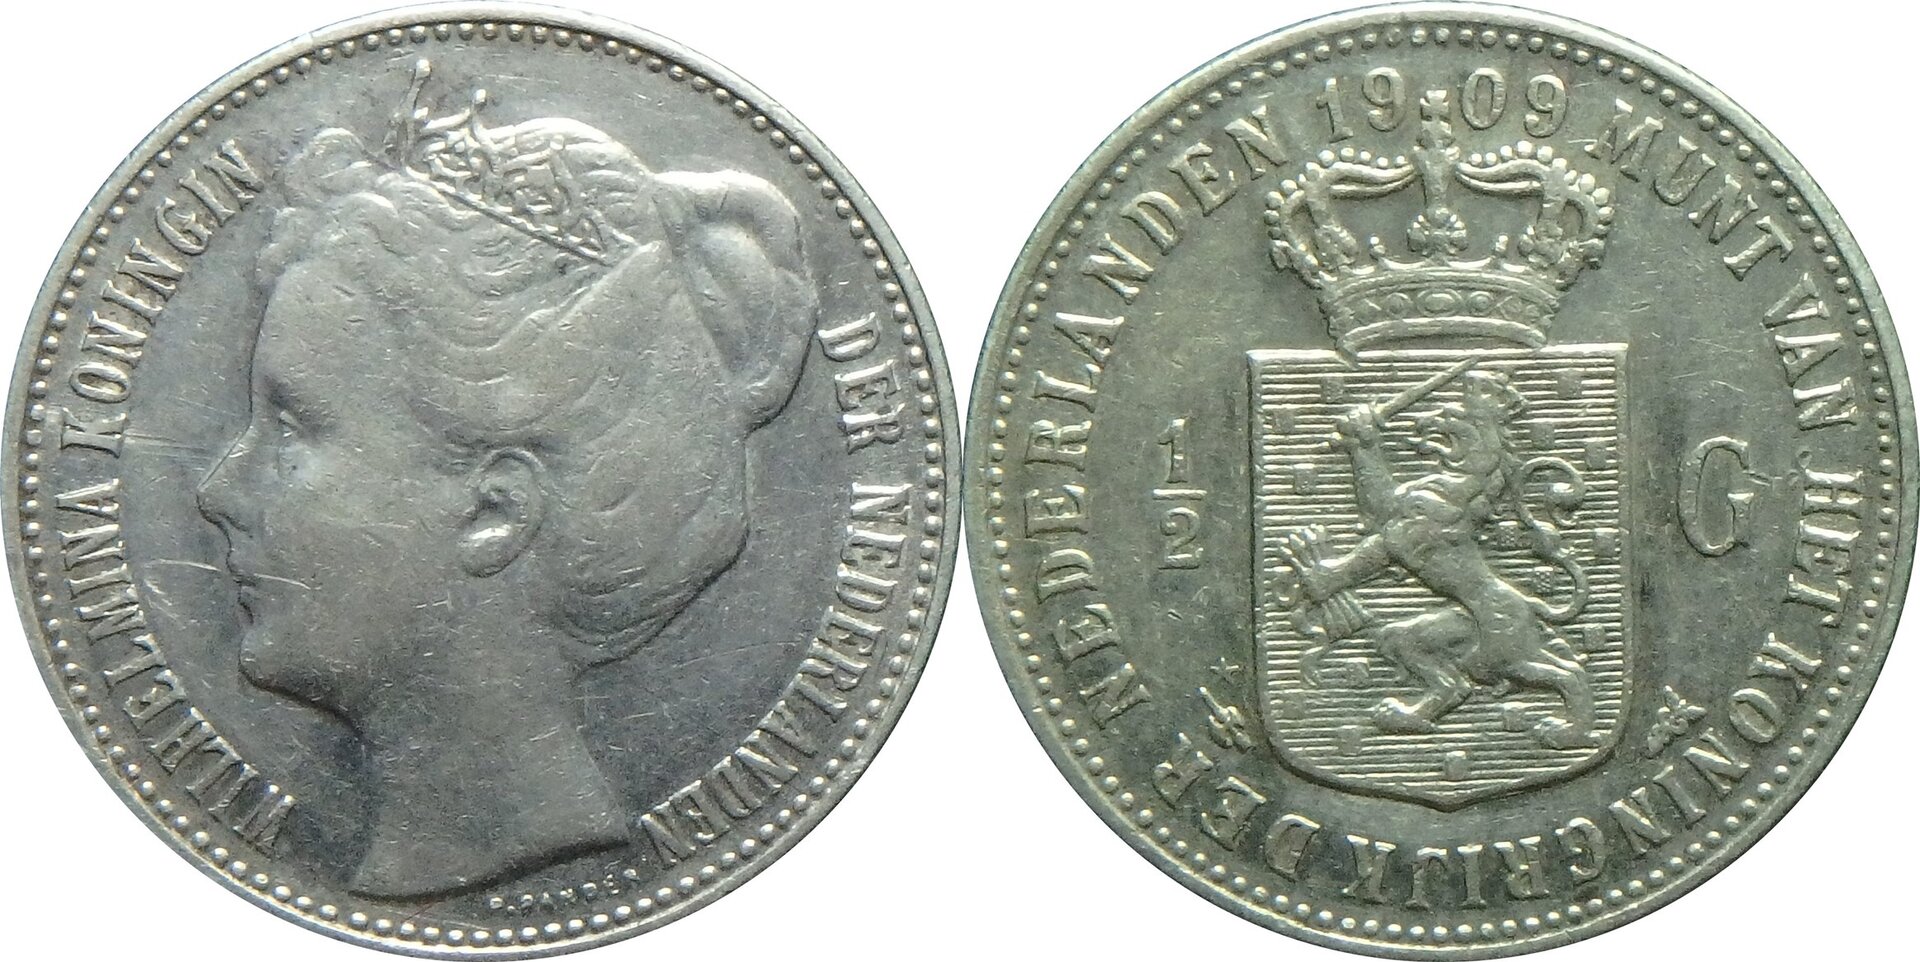 1909 NL 1-2 g.jpg